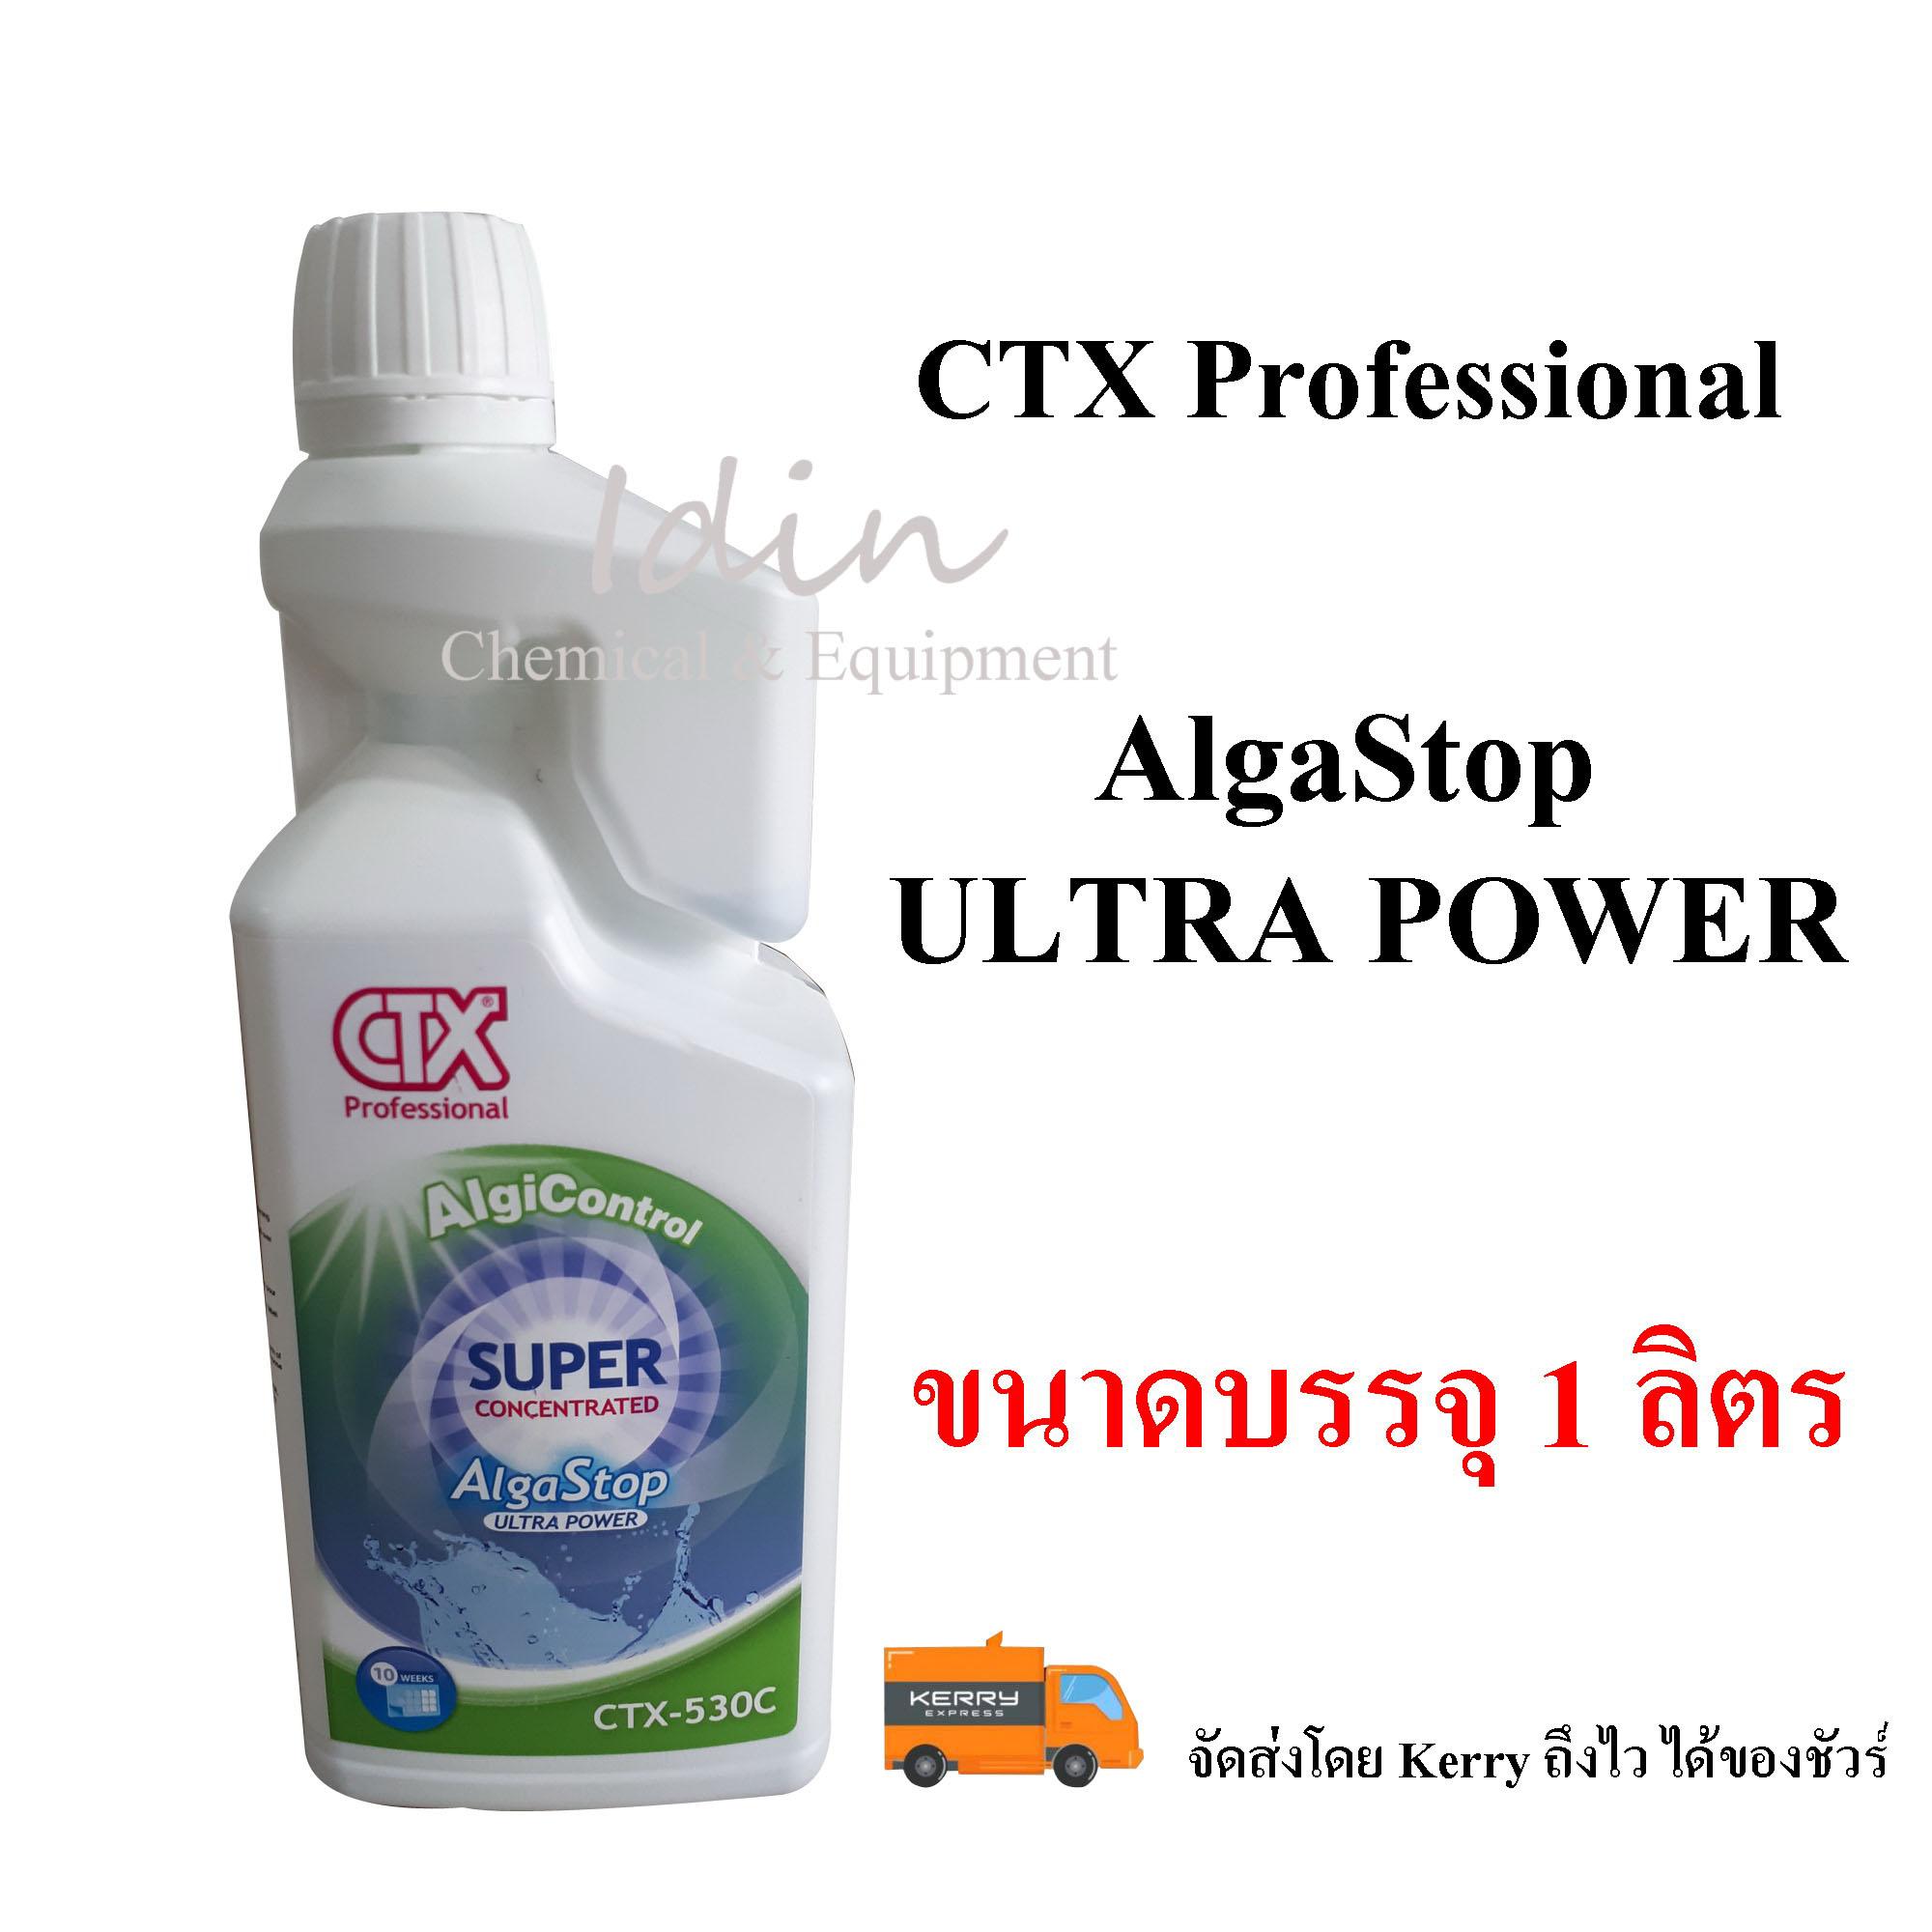 CTX AlgaStop น้ำยากำจัดตะไคร่น้ำ 1 ลิตร x 1 ขวด